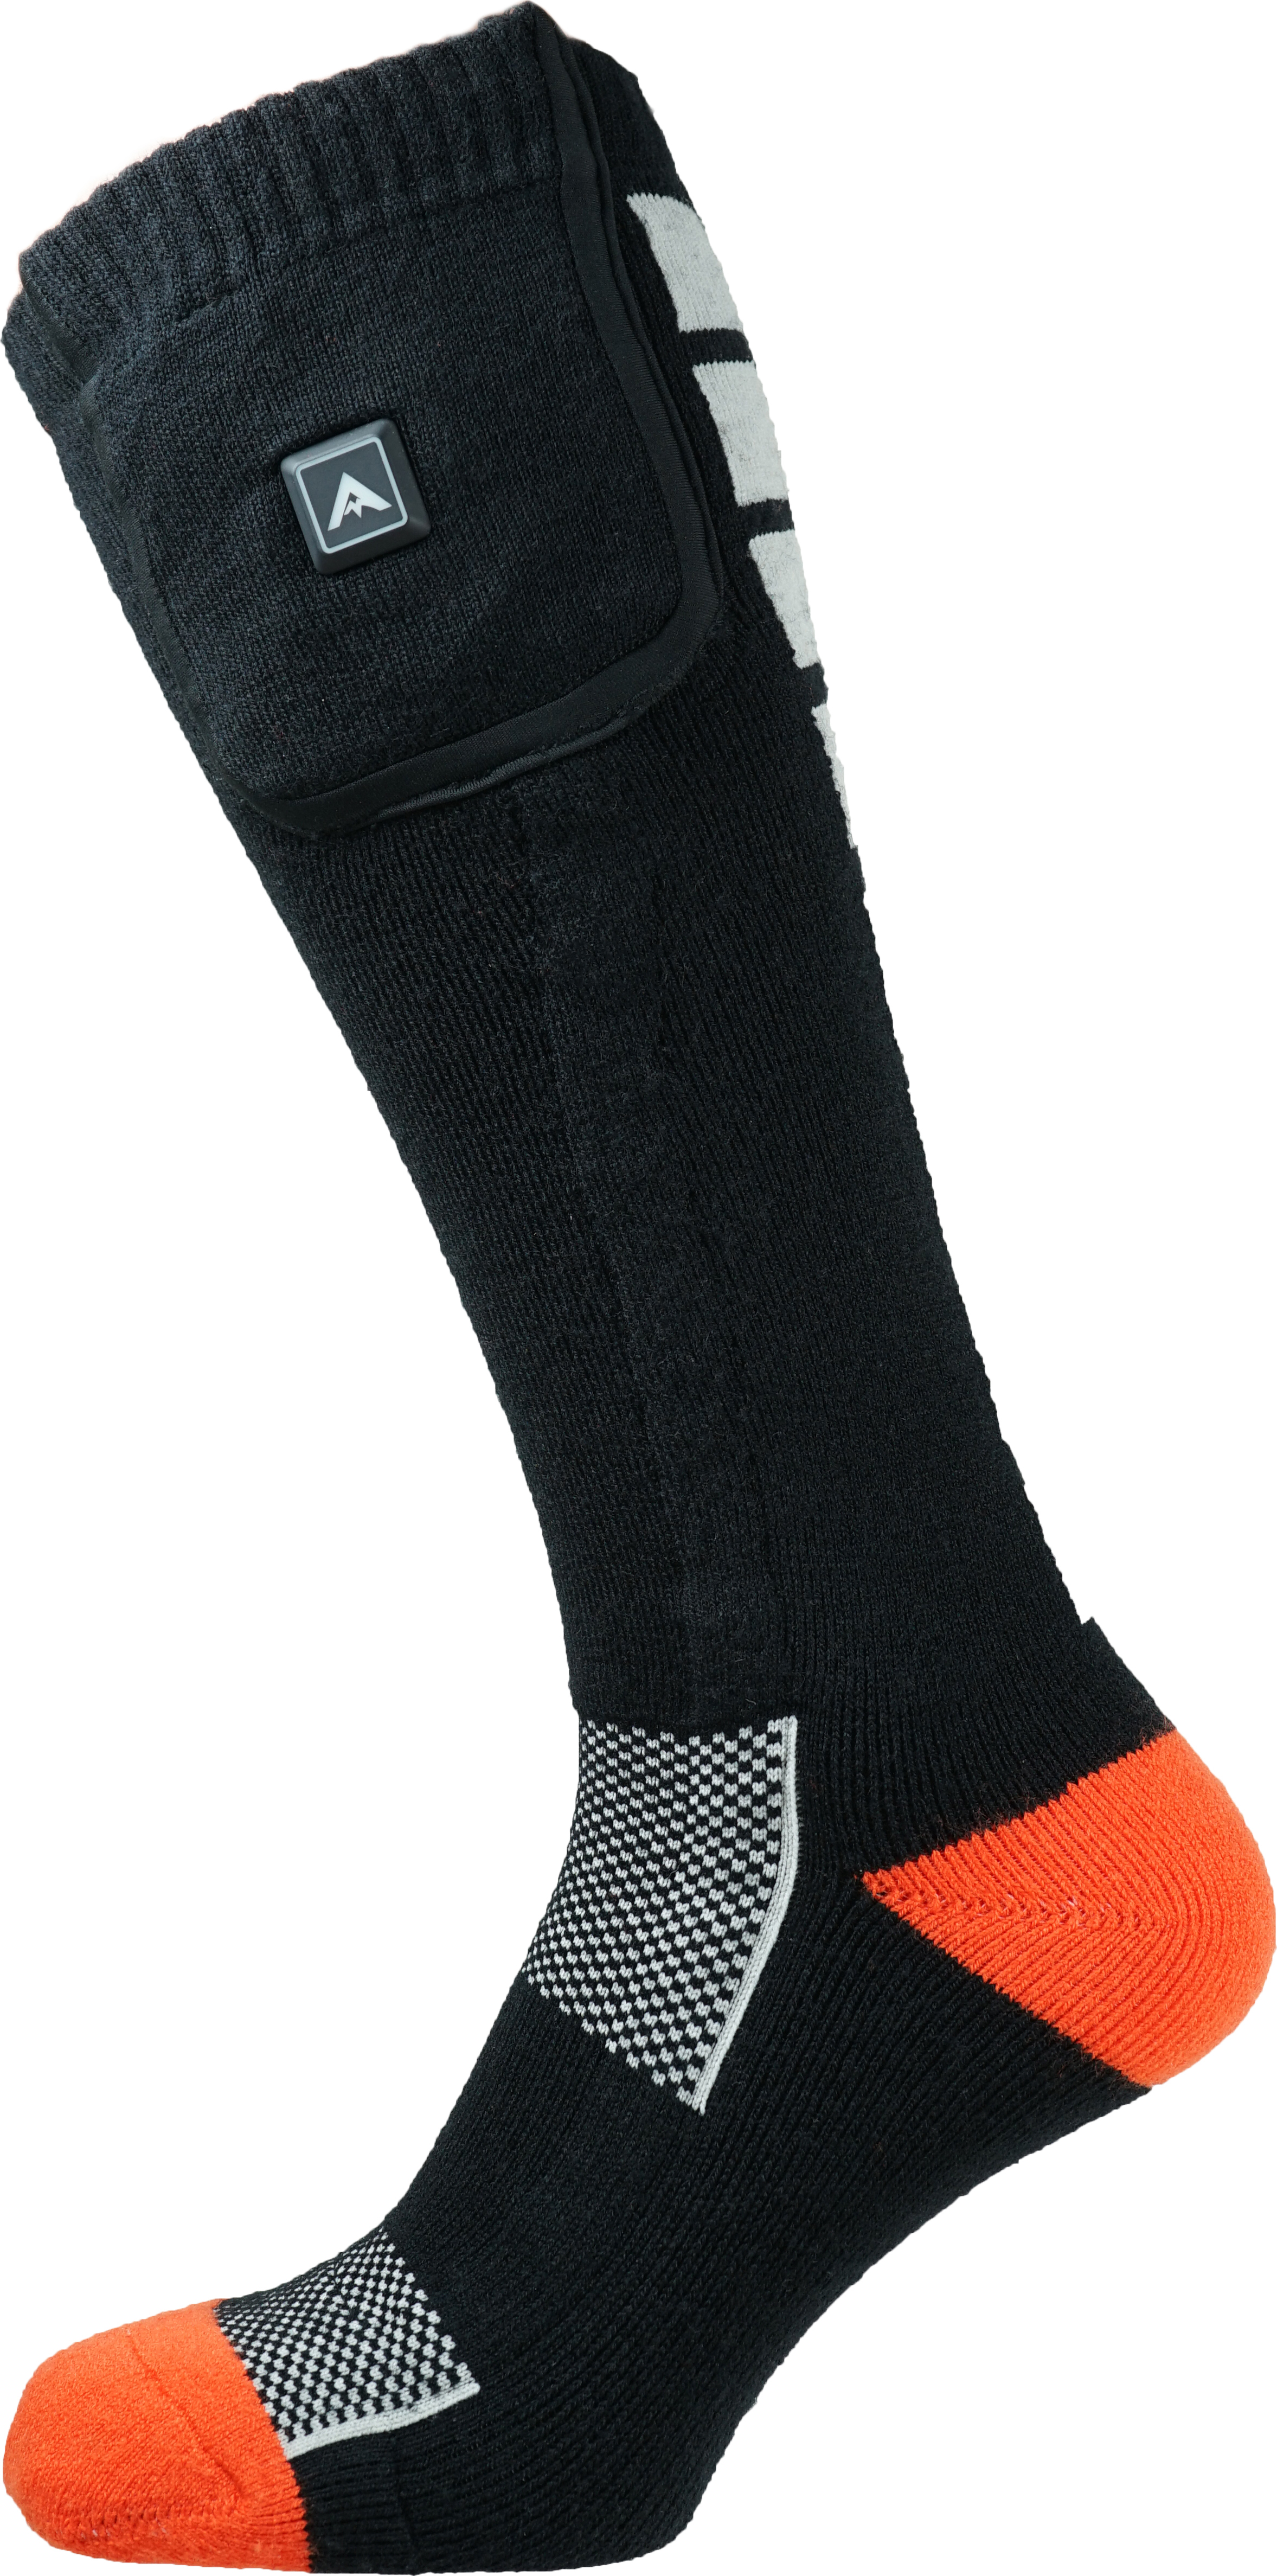 Heat Sock Surround Basic Black